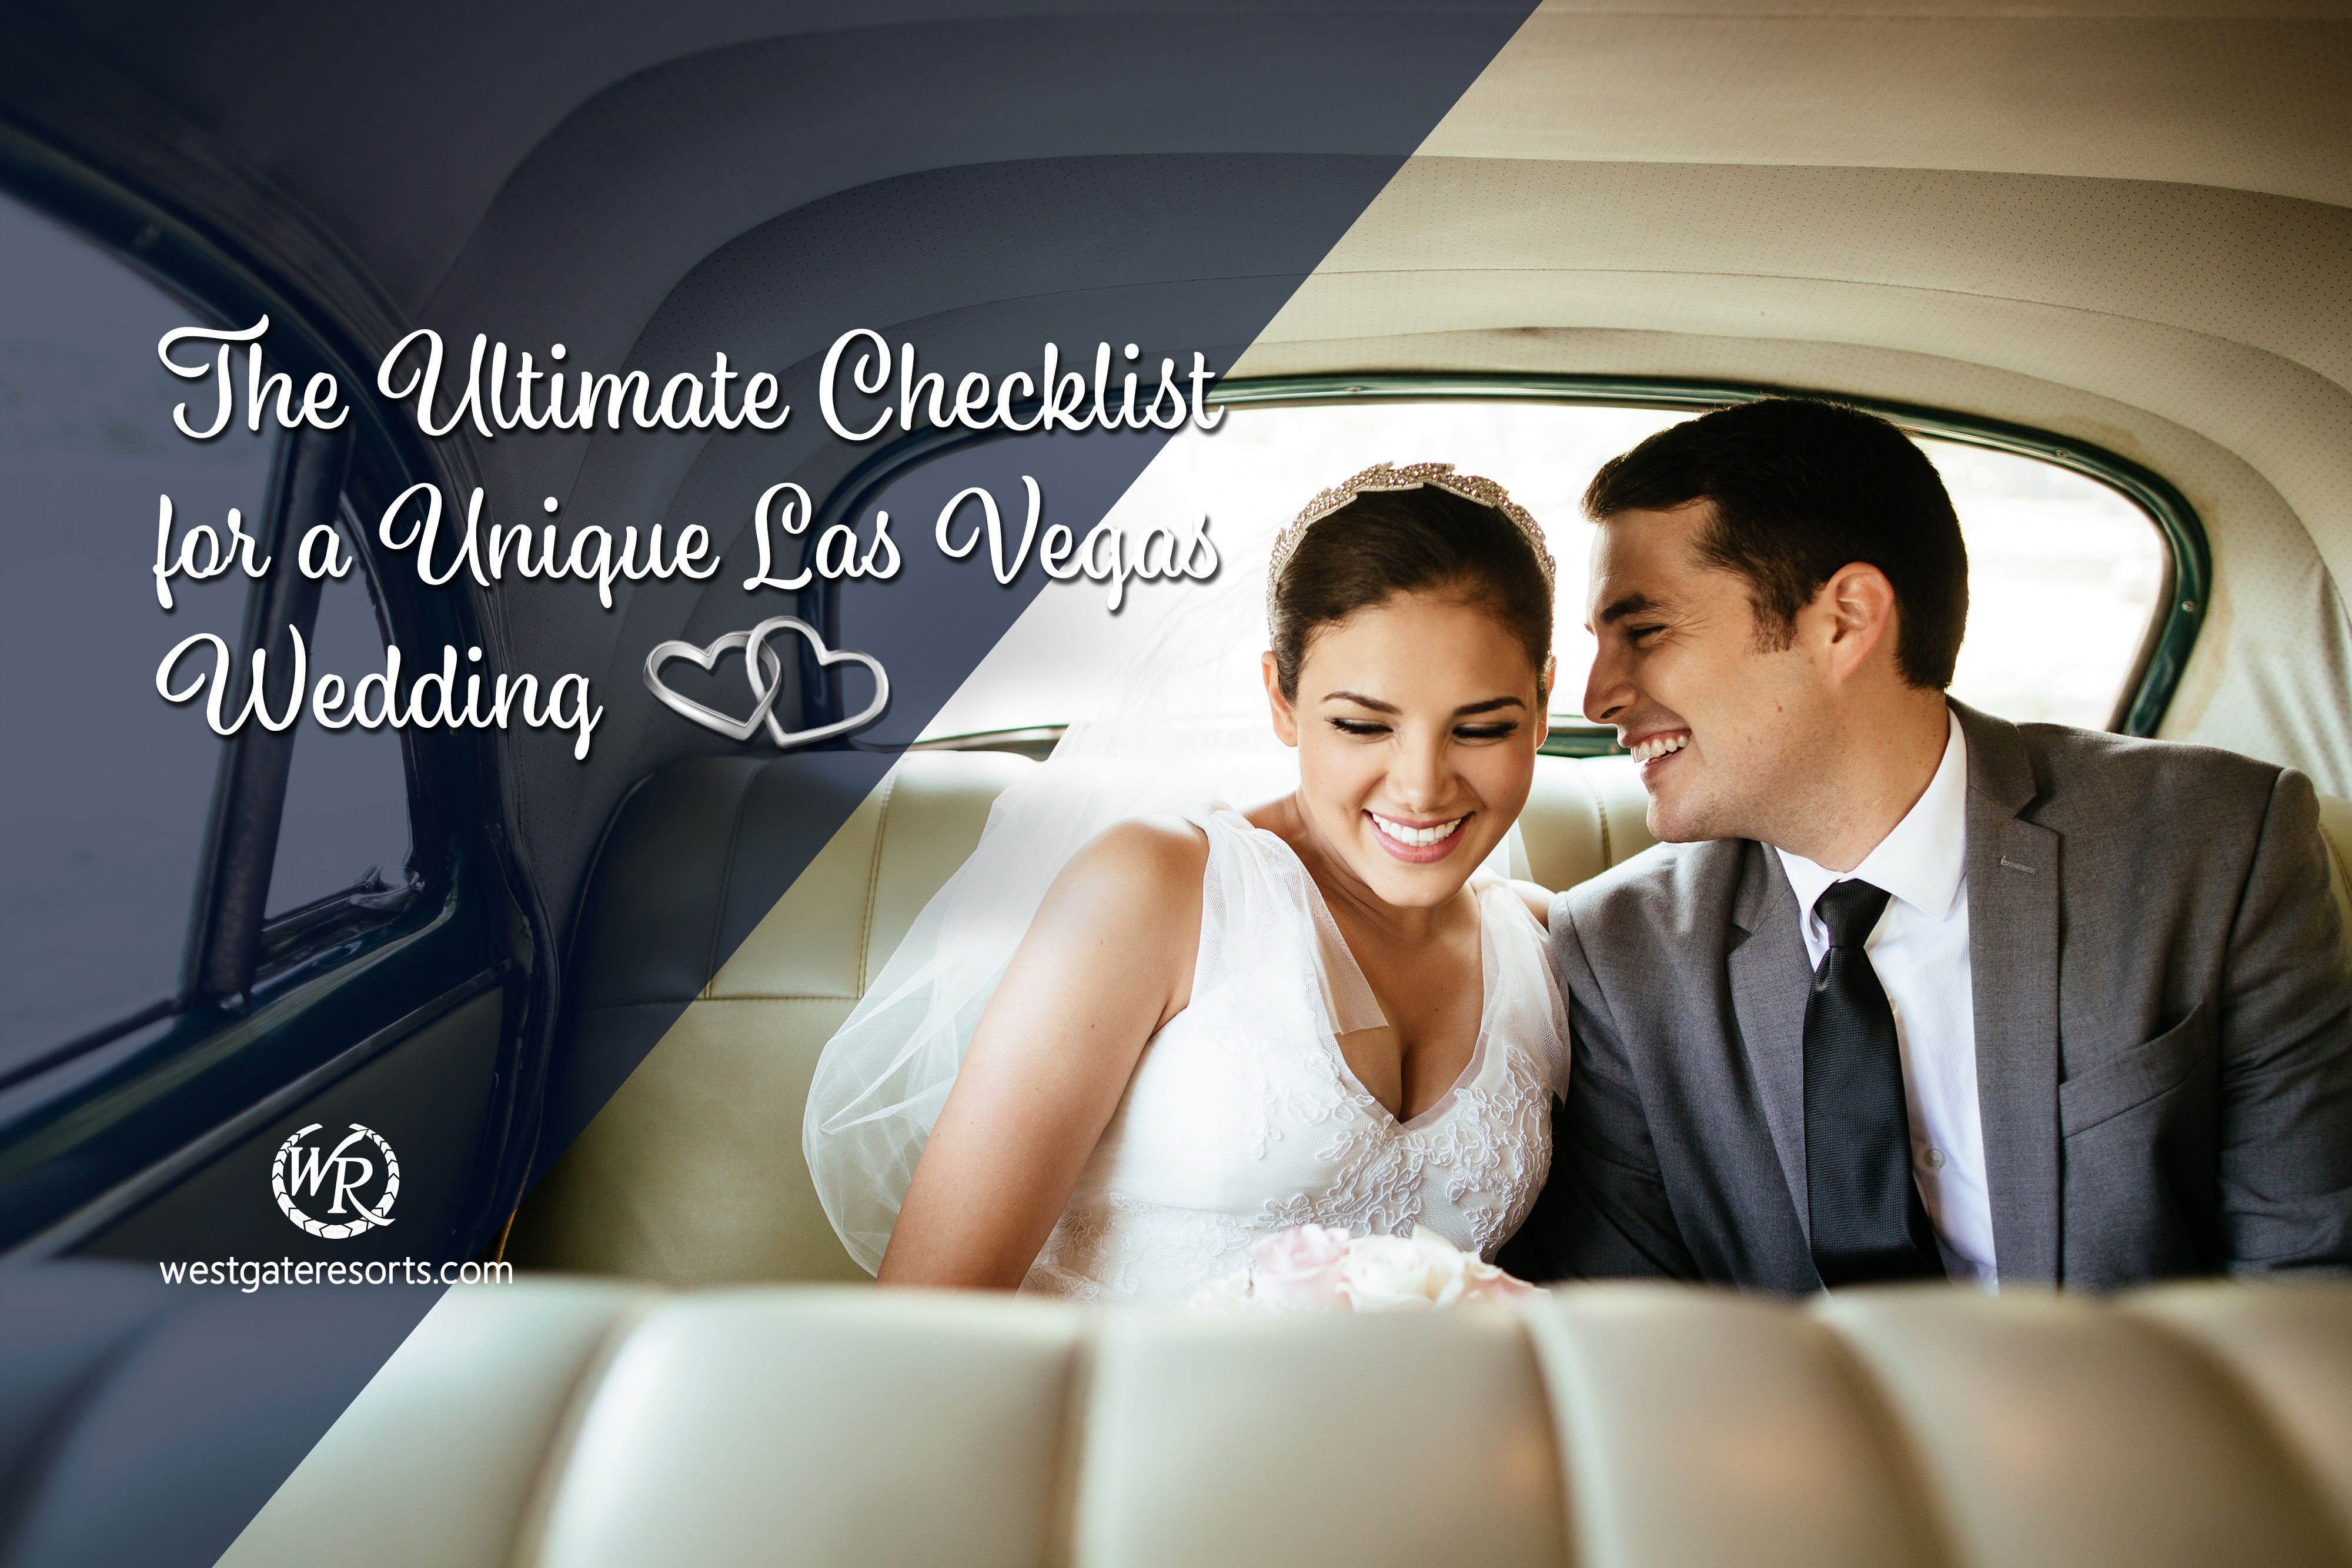 The Ultimate Checklist for a Unique Las Vegas Wedding